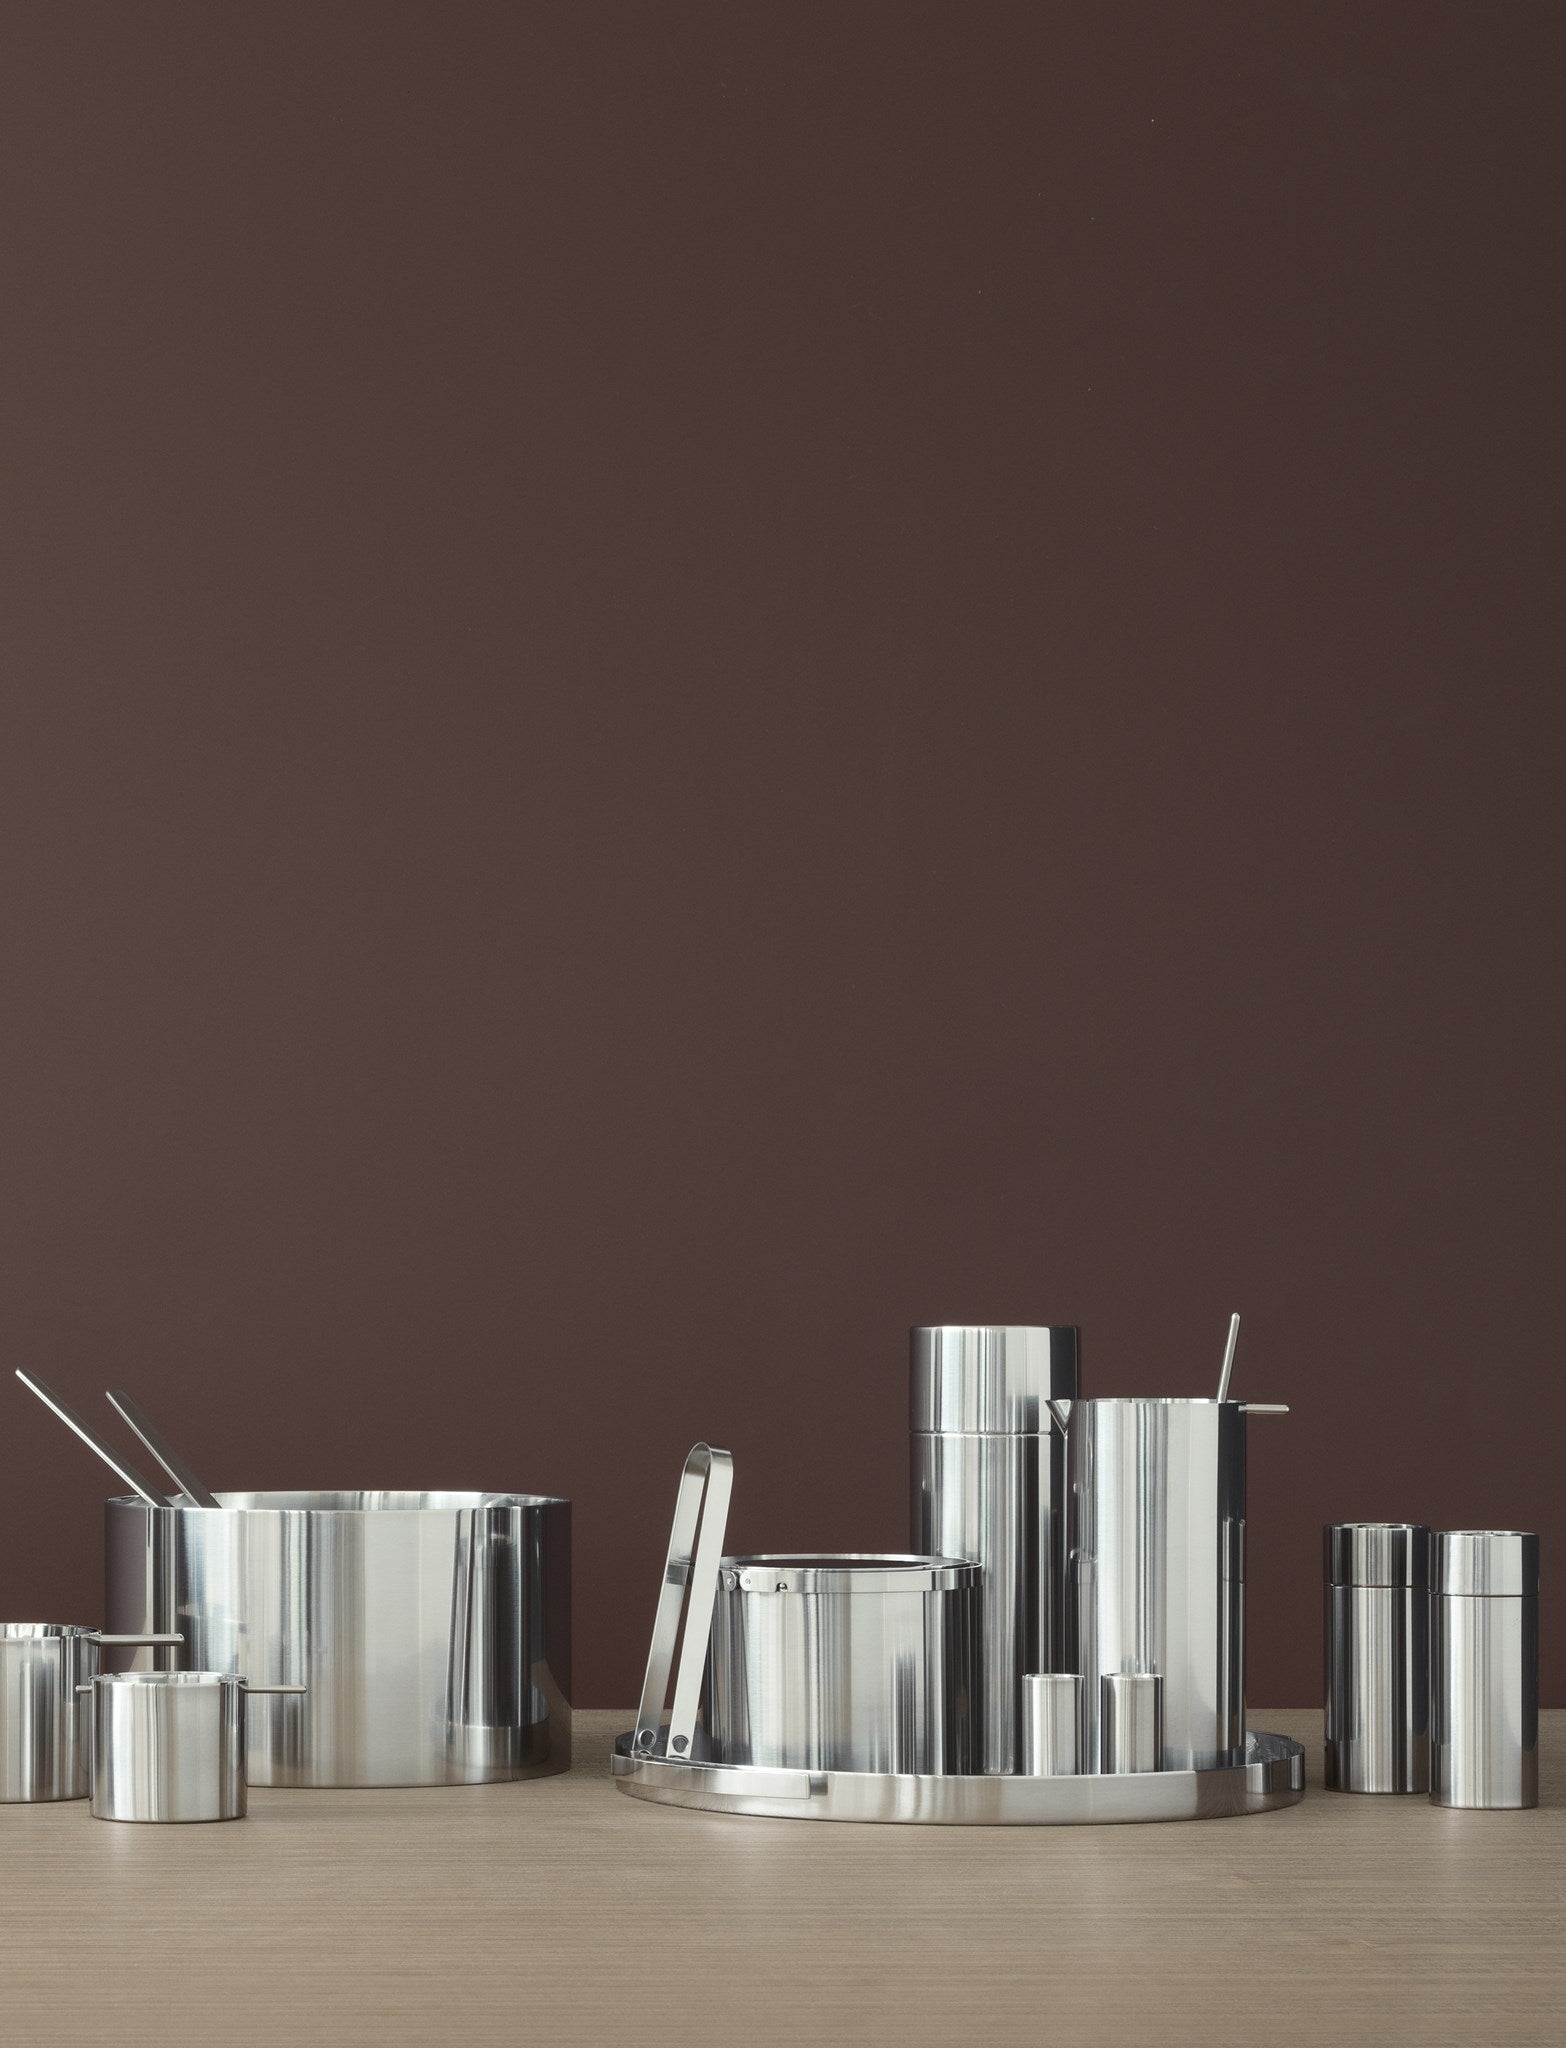 Mulino pepe di Stelton Arne Jacobsen